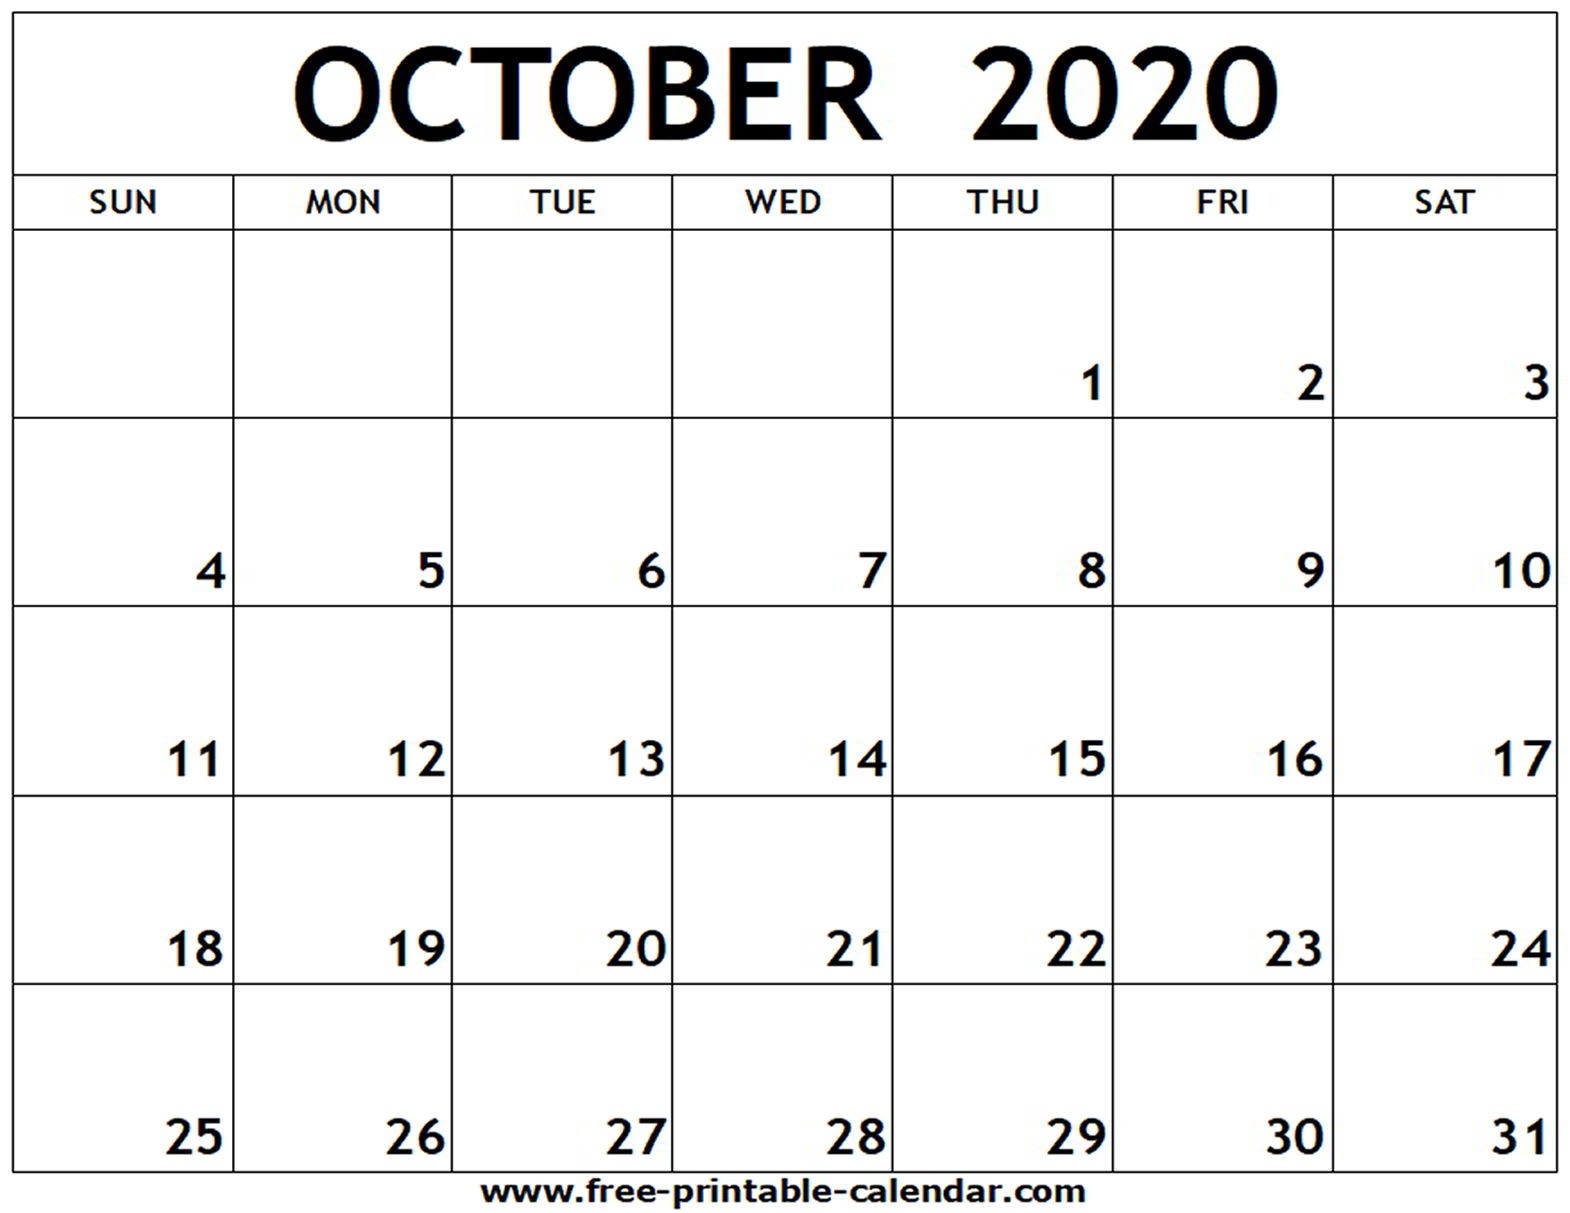 Calendar October 2020 - Wpa.wpart.co-October 2020 Calendar Jewish Holidays